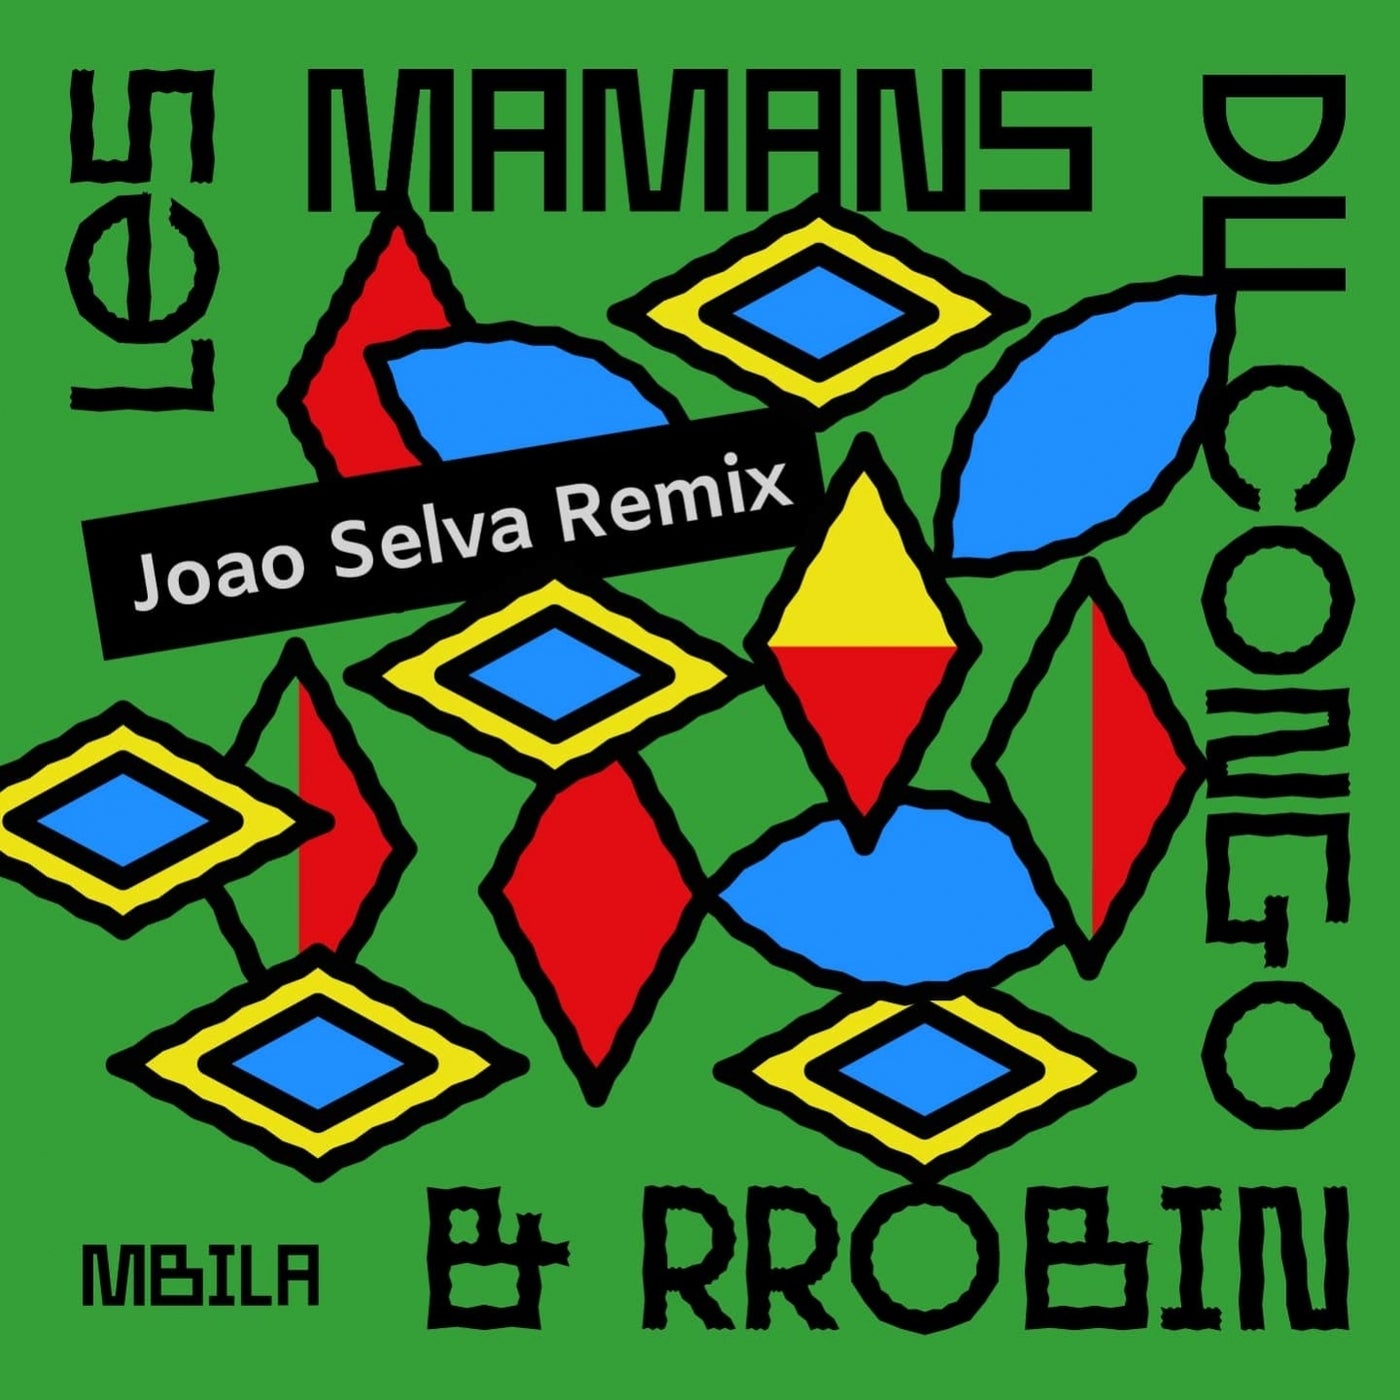 Mbila (Joao Selva Remix)